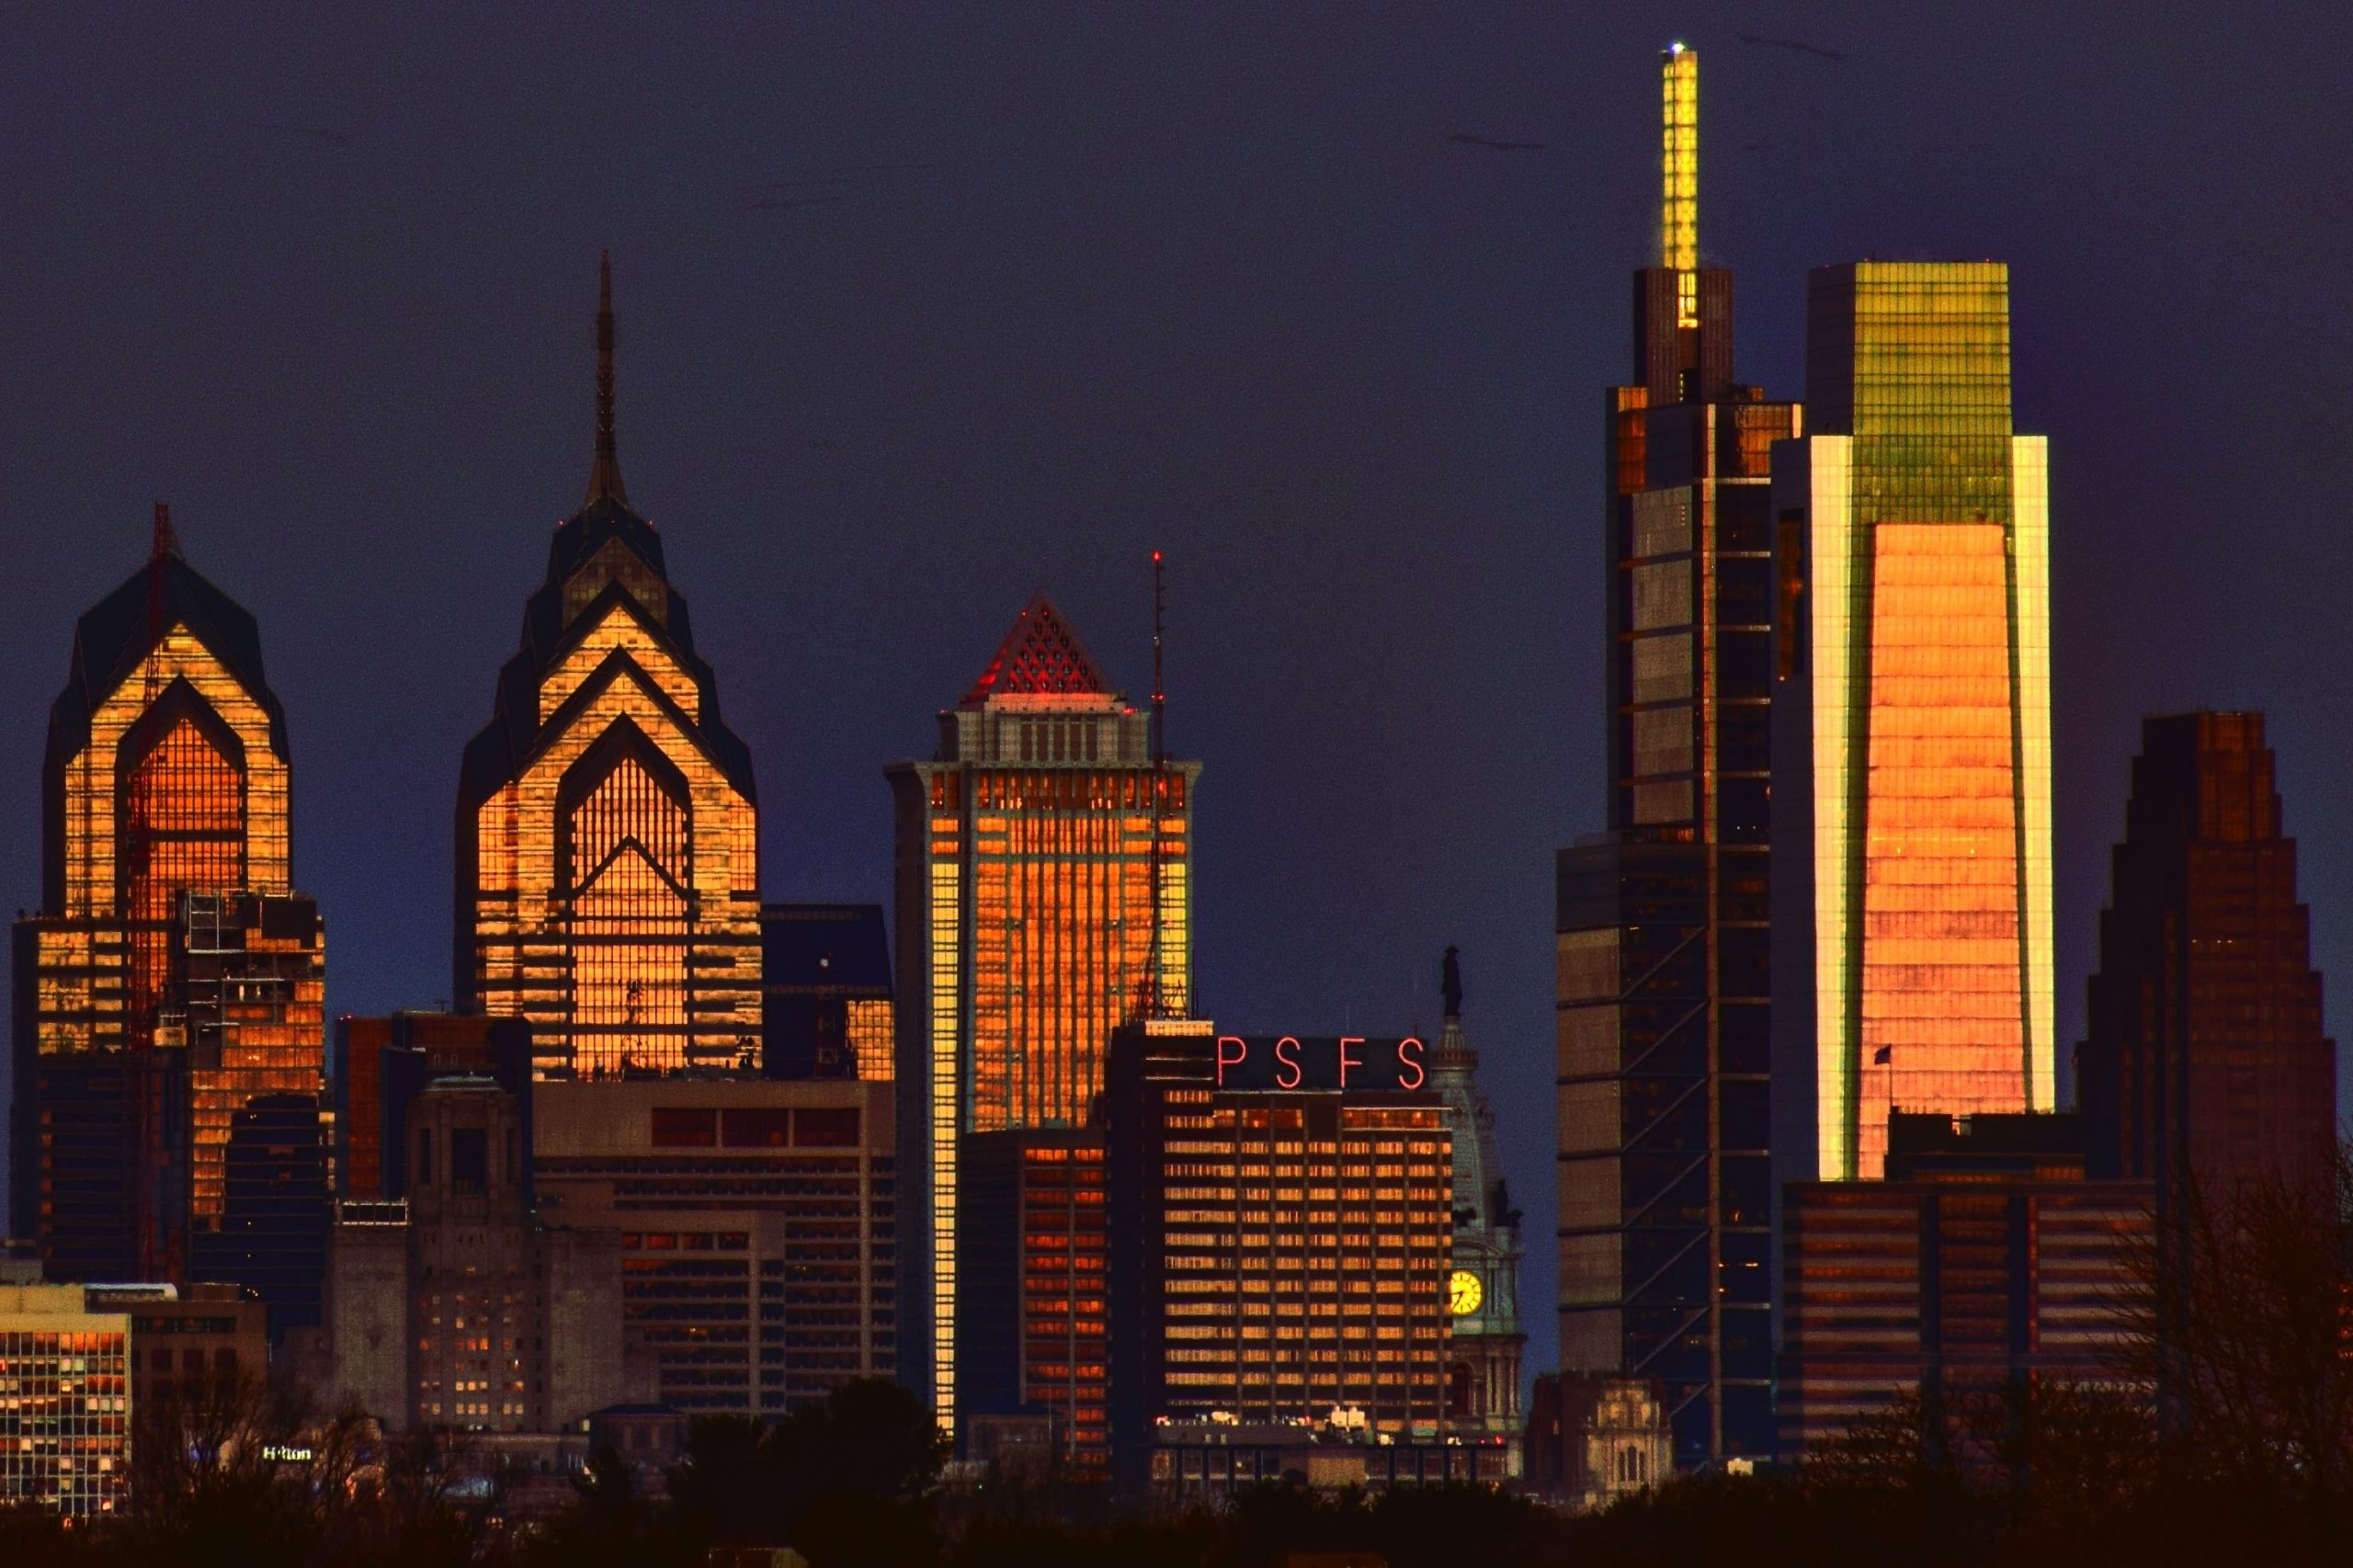 Comcast Center (right) in the Philadelphia skyline. Photo by Thomas Koloski